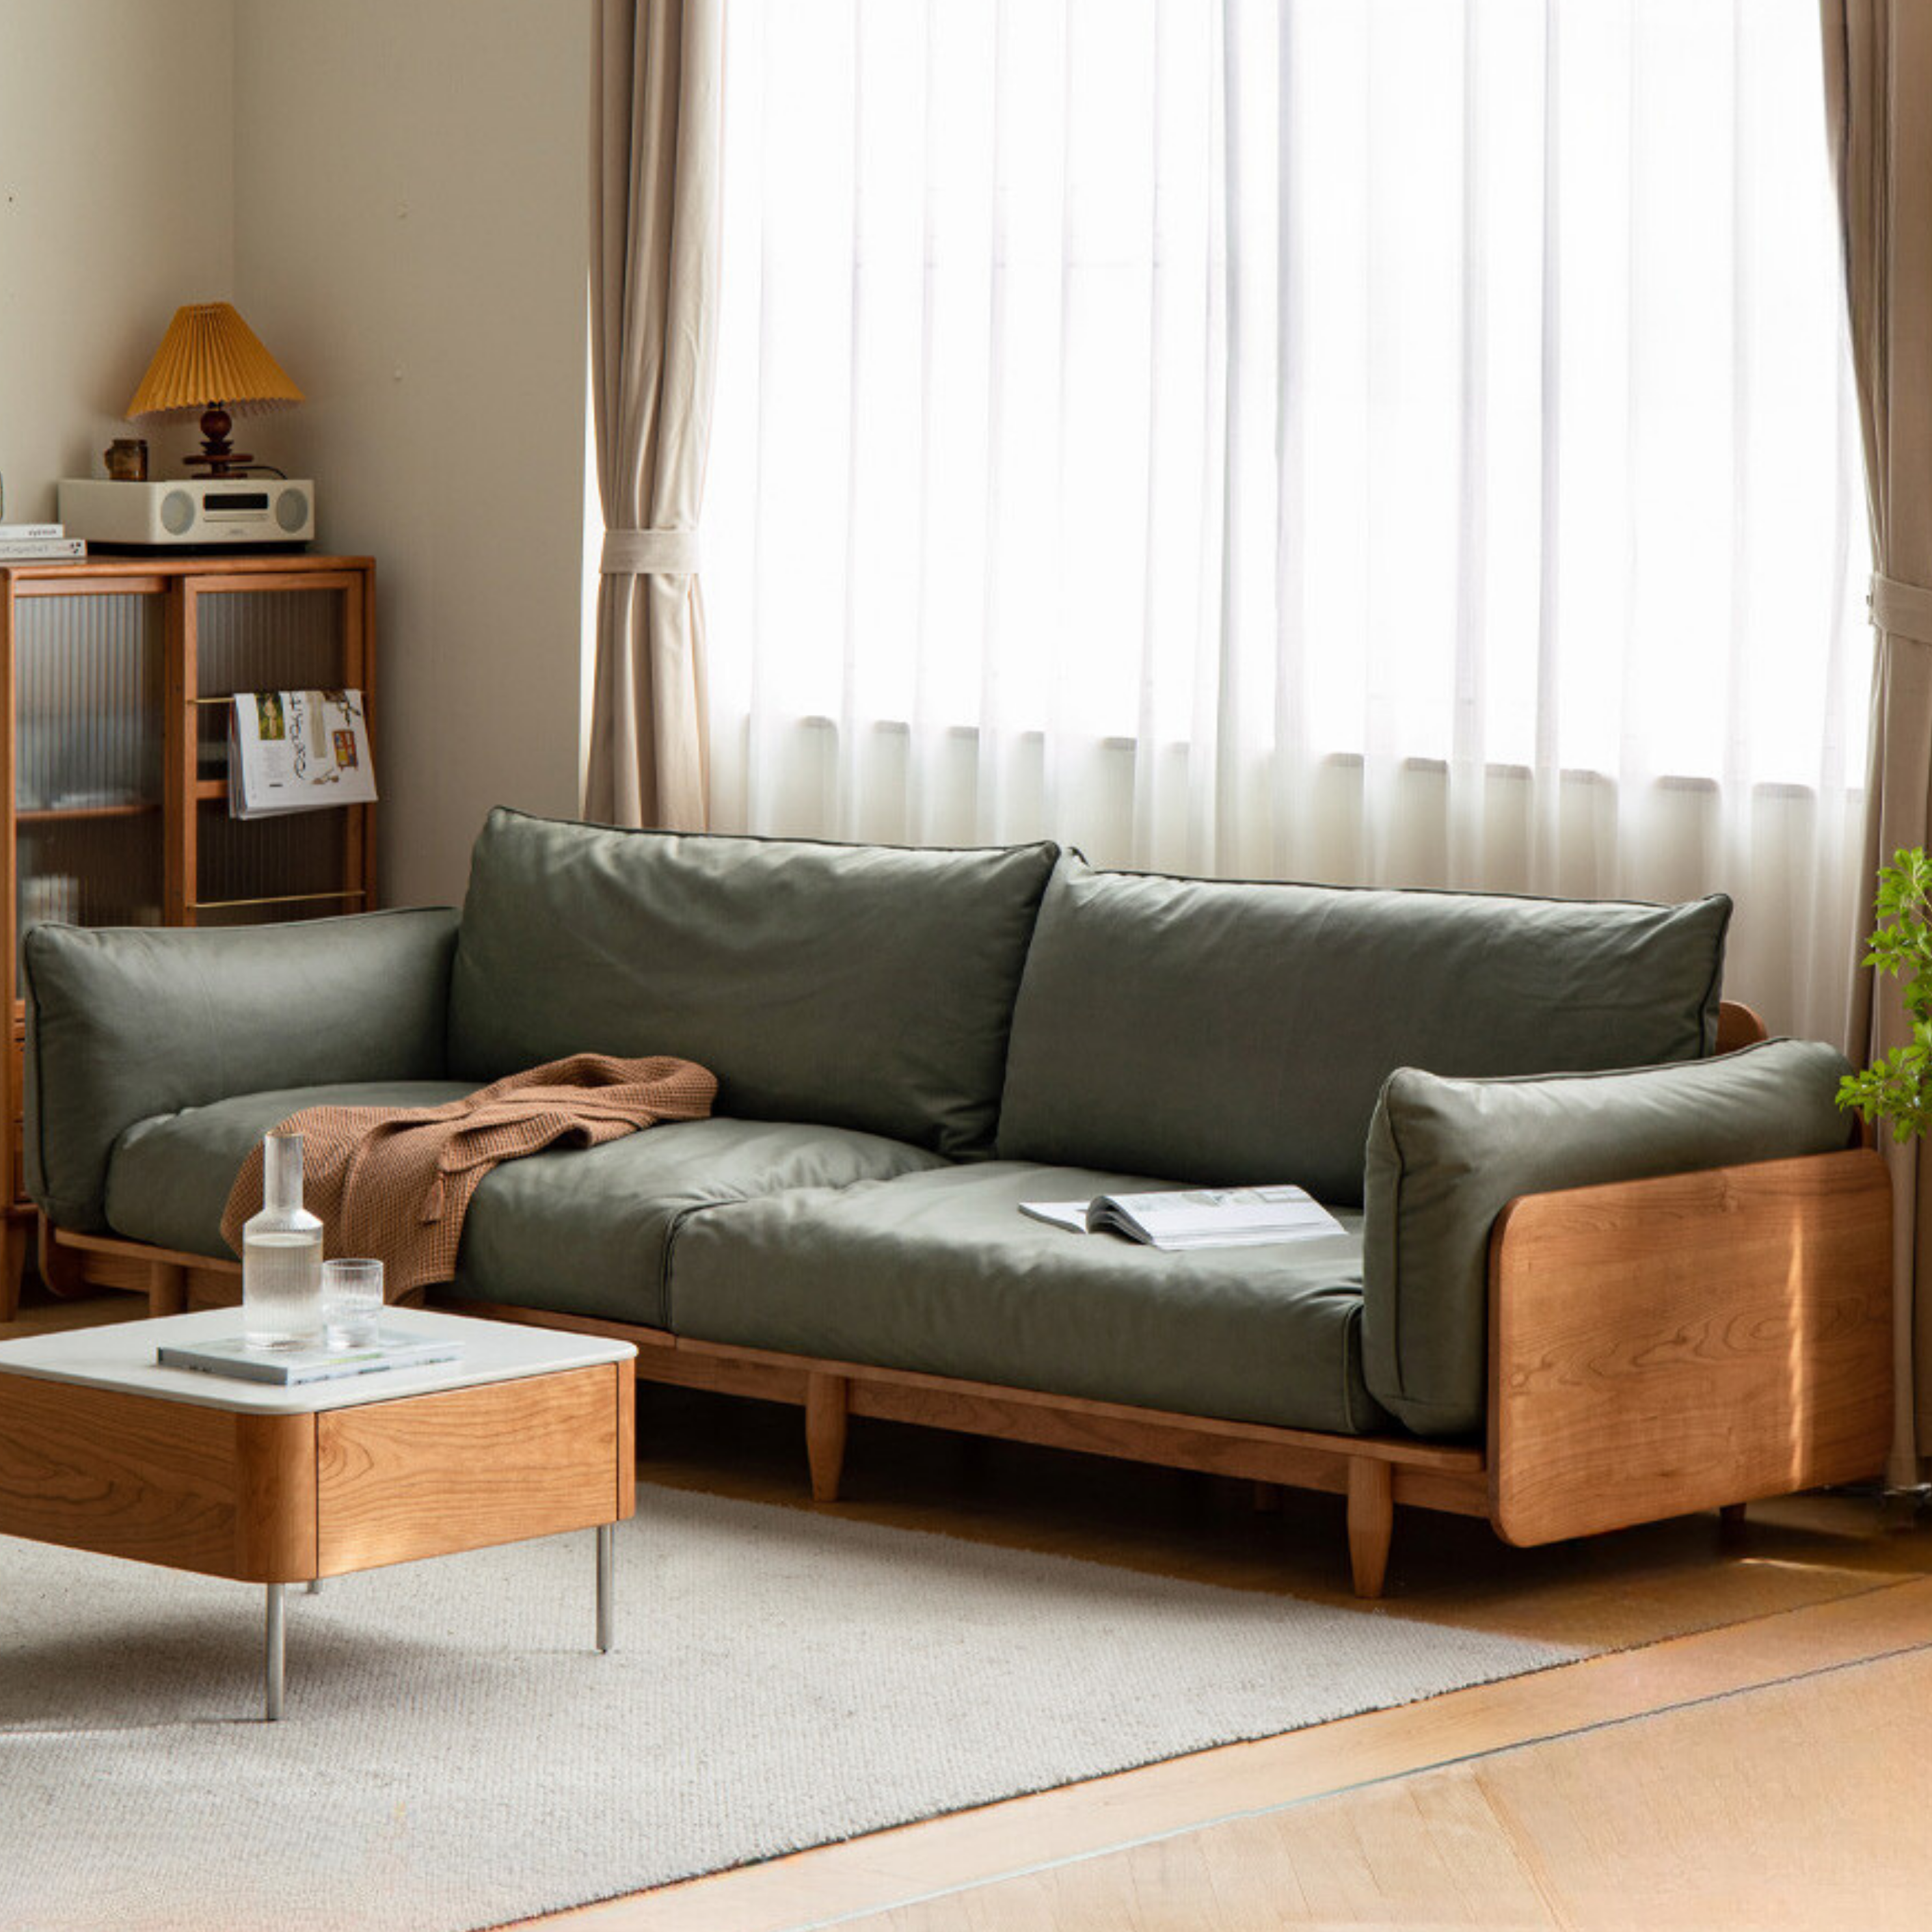 Sofa Cherry wood Leather, Technology cloth -